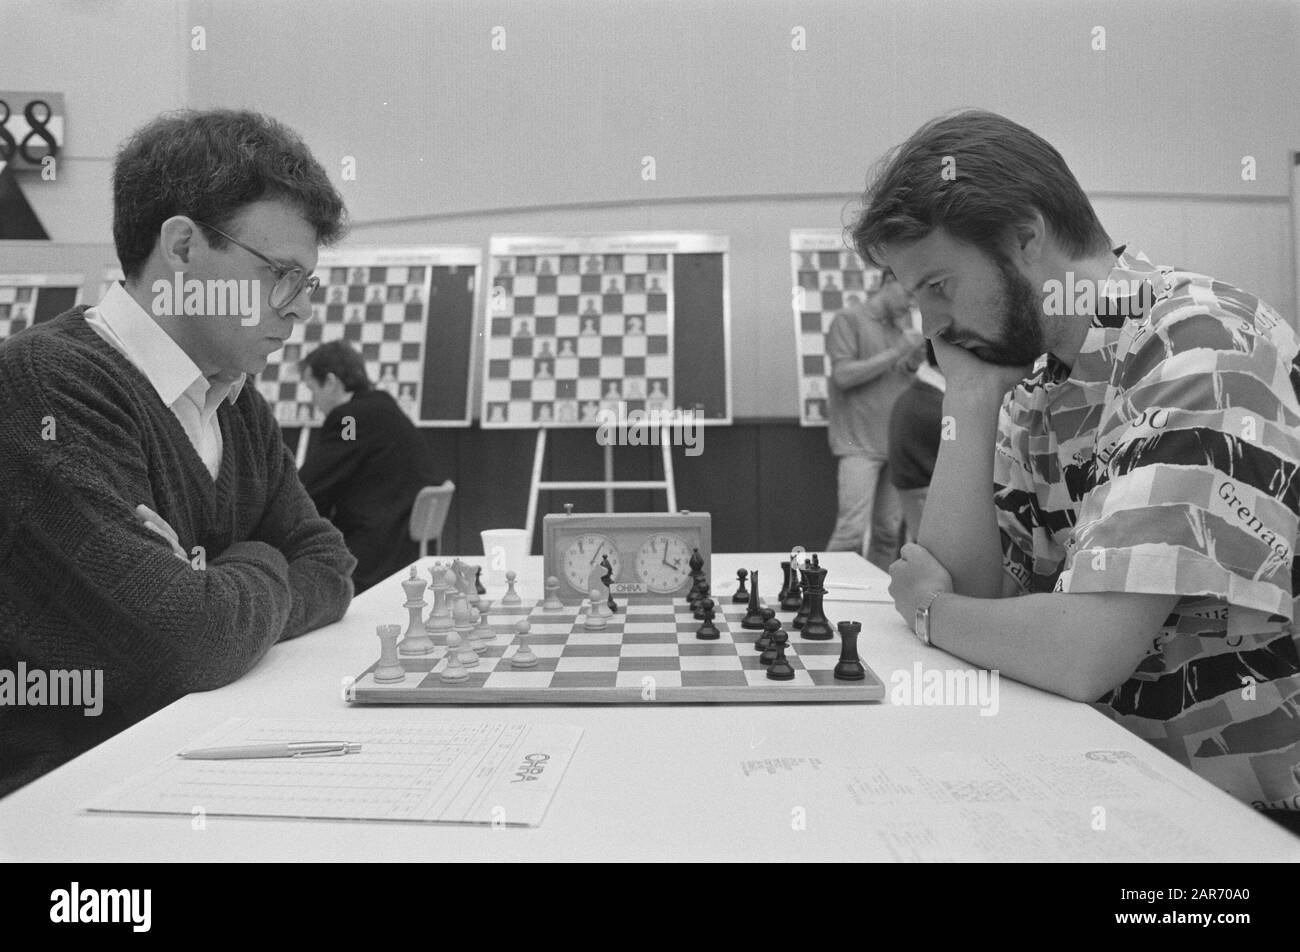 Chess; John van Wiel (r), Van der Stars Date: June 20, 1988 Location: Hilversum Keywords: chess Personal name: John van der Wiel, Van der Stars Stock Photo -